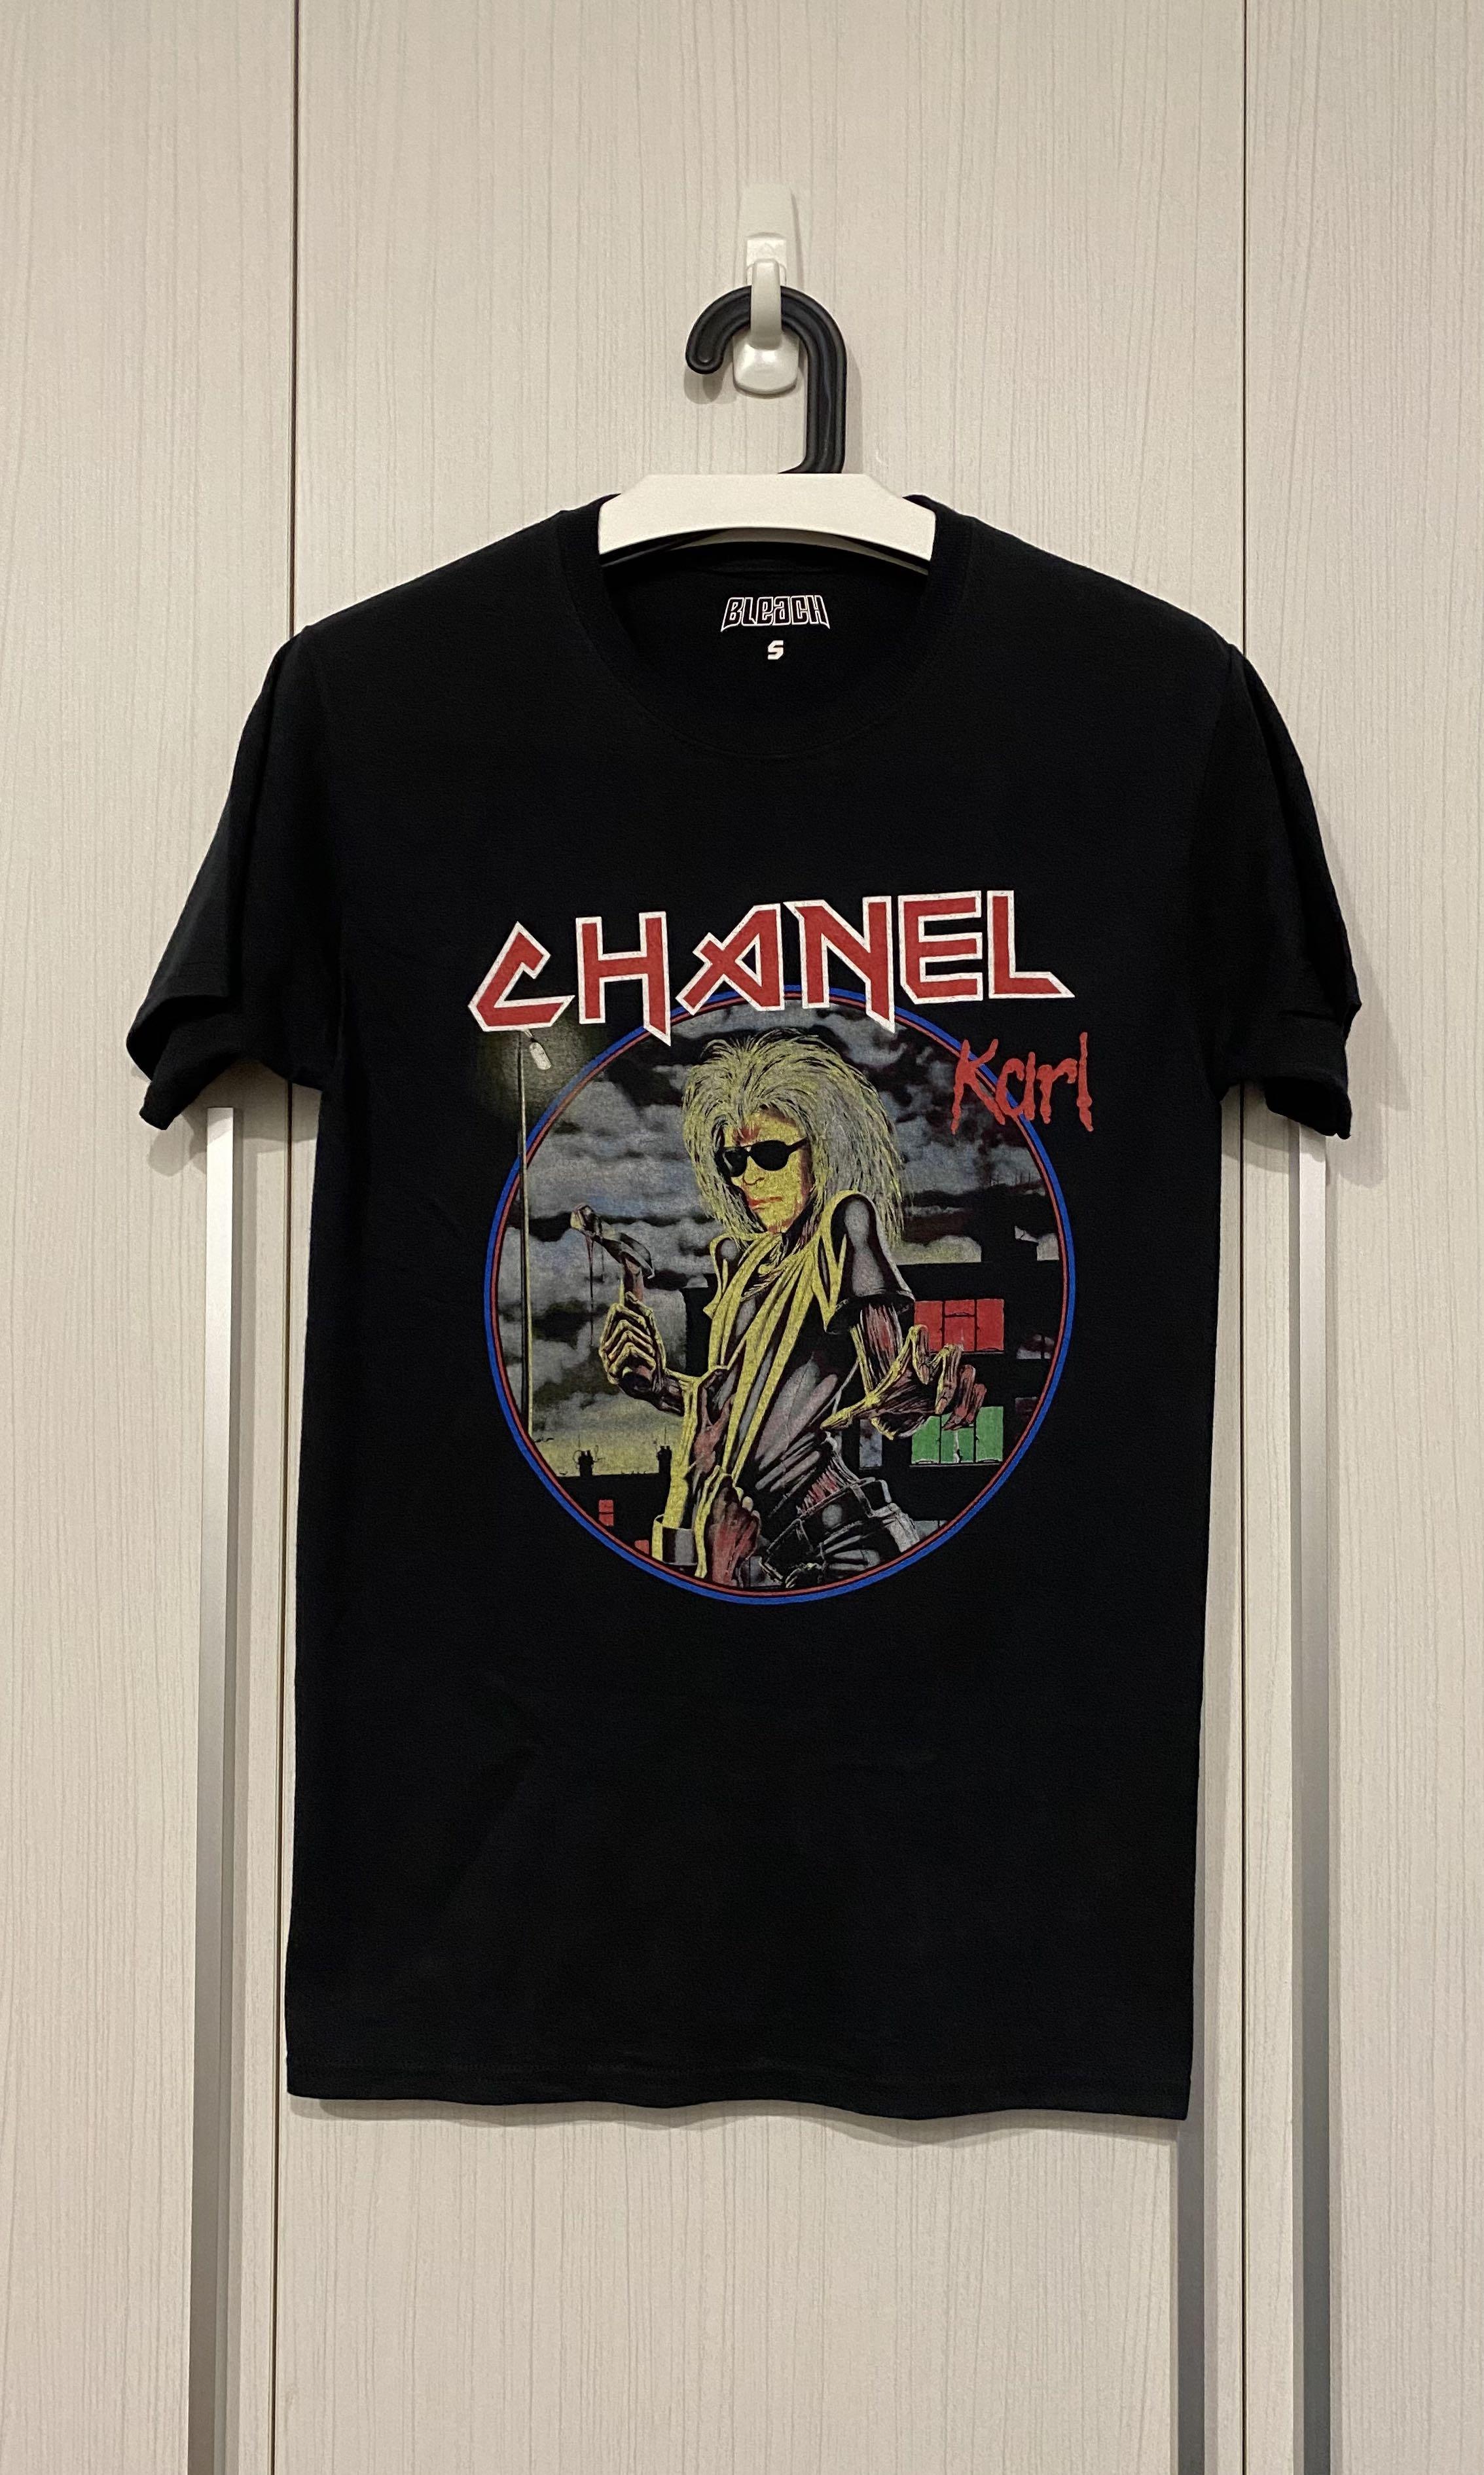 Chanel Formula One Tshirt  Bluecat